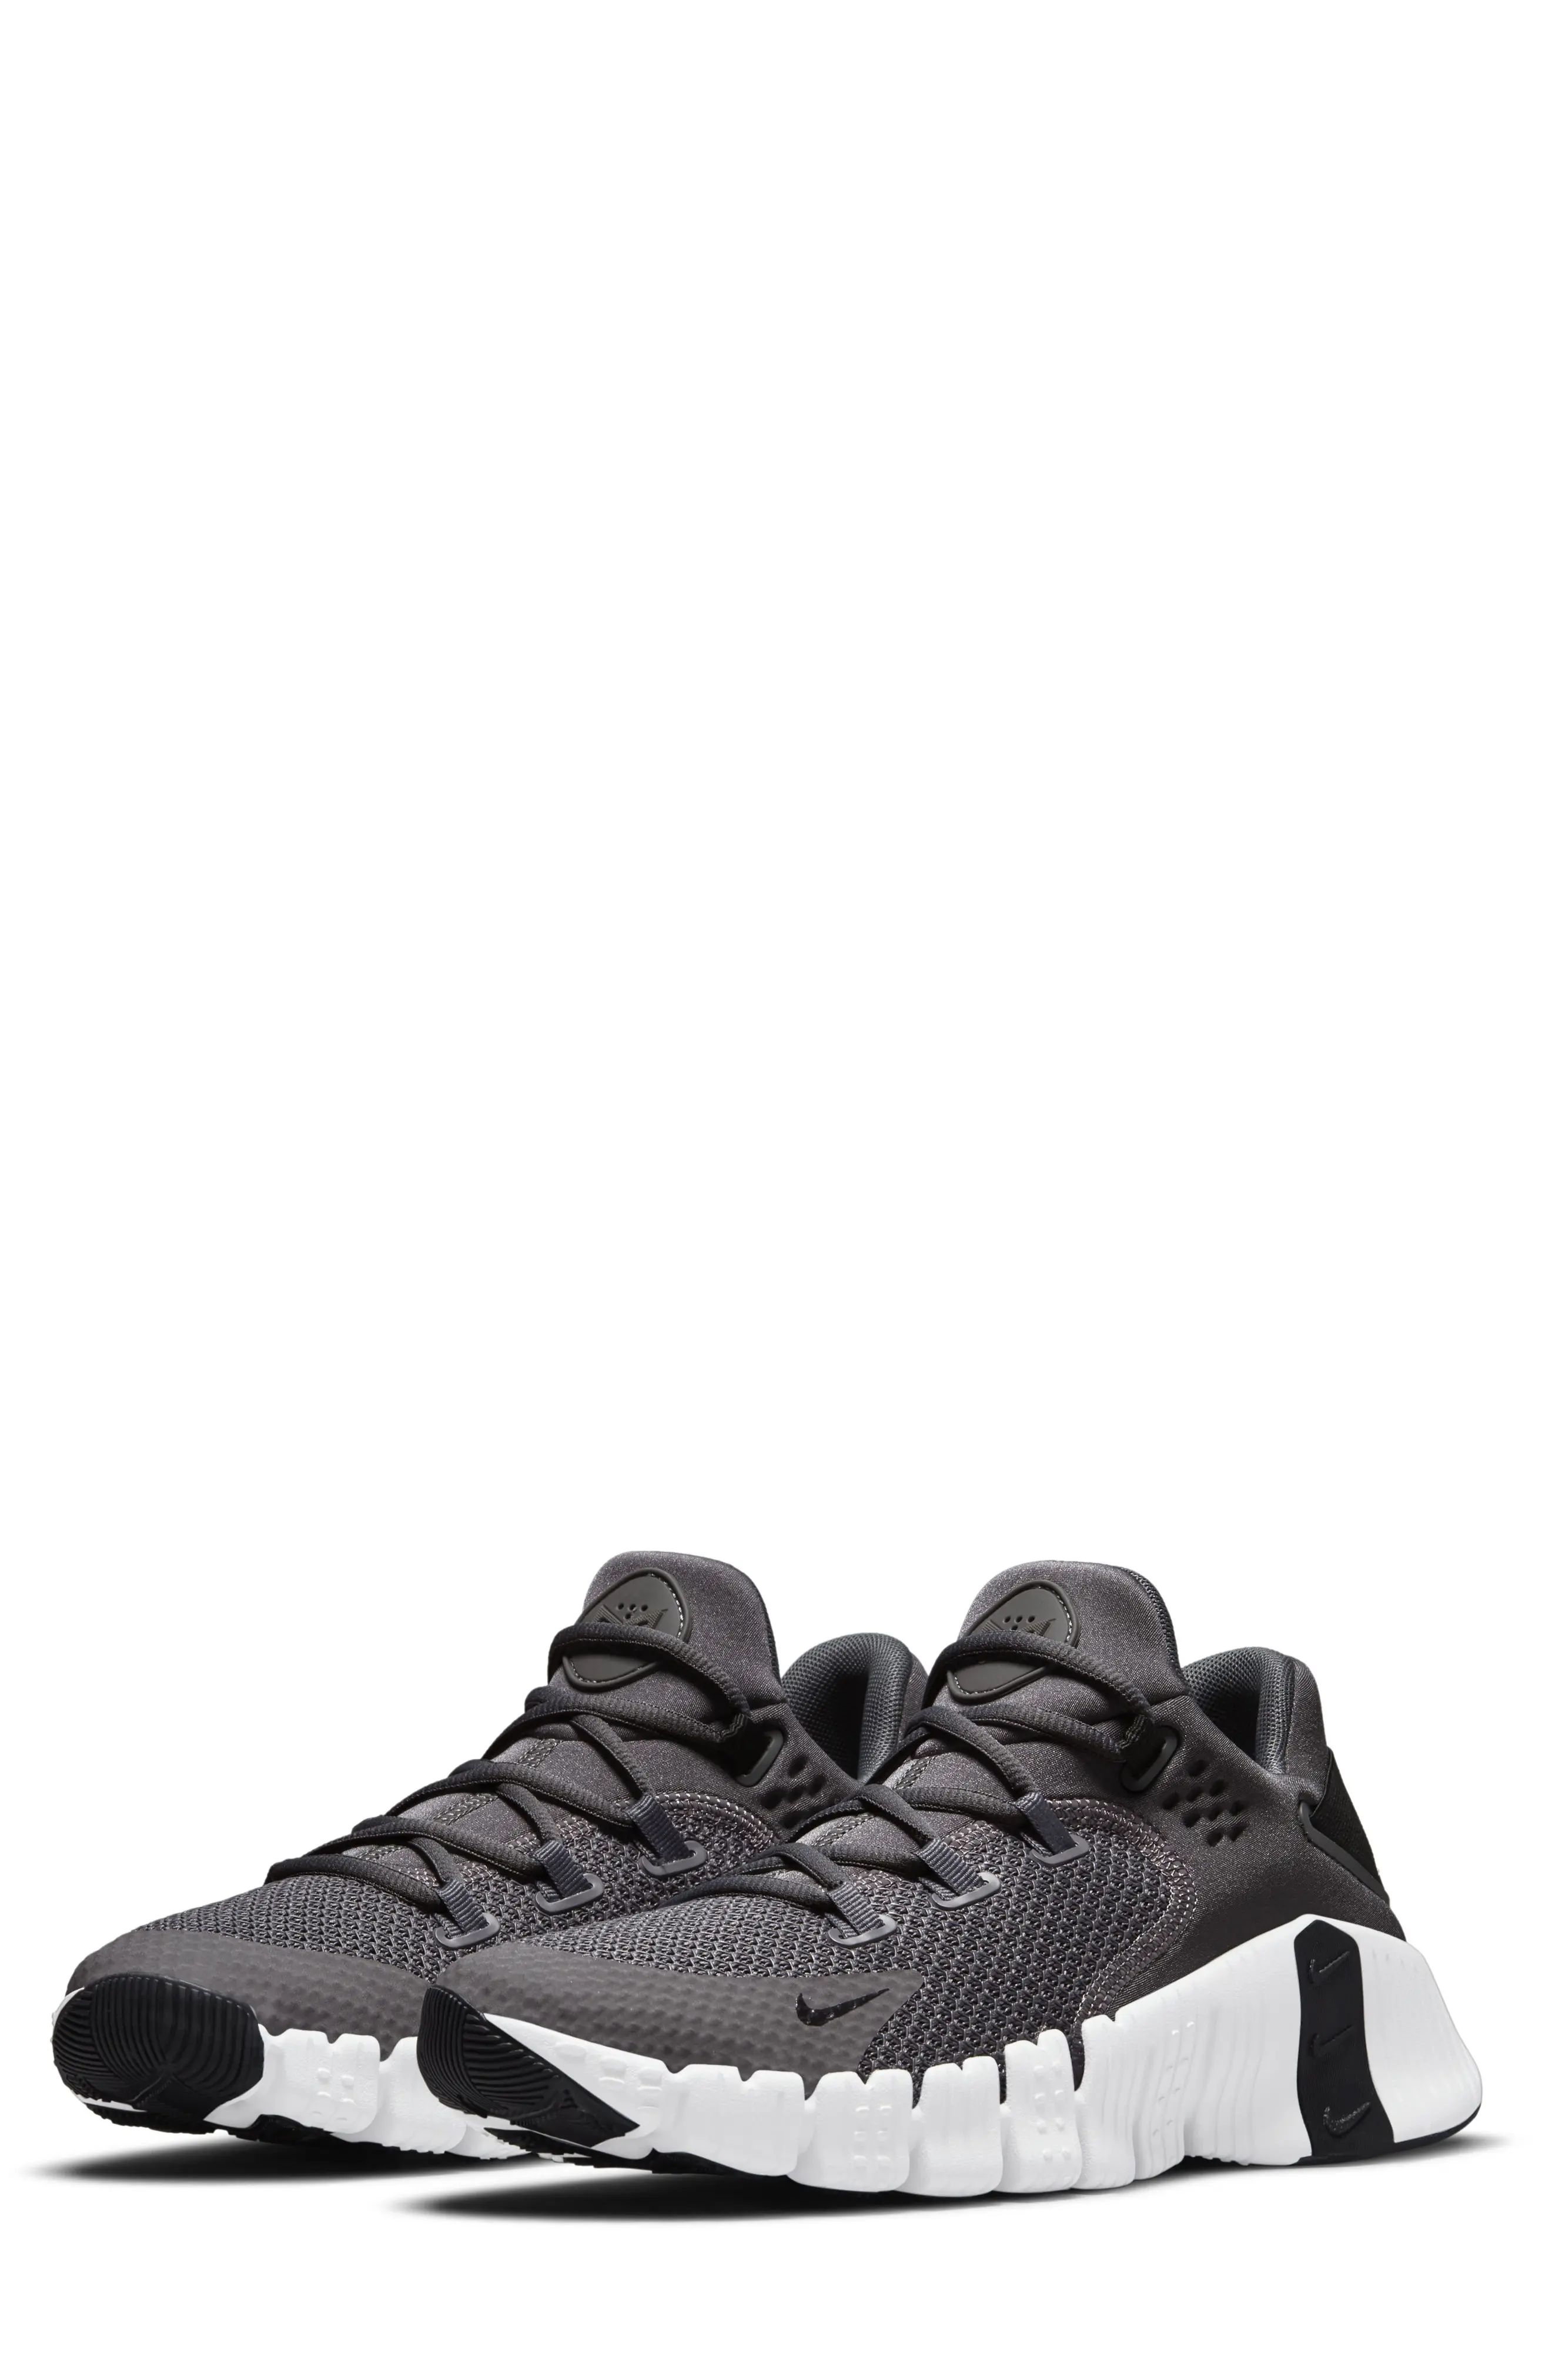 Nike Free Metcon 4 Training Shoe in Grey/Black/Grey at Nordstrom, Size 11.5 | Nordstrom